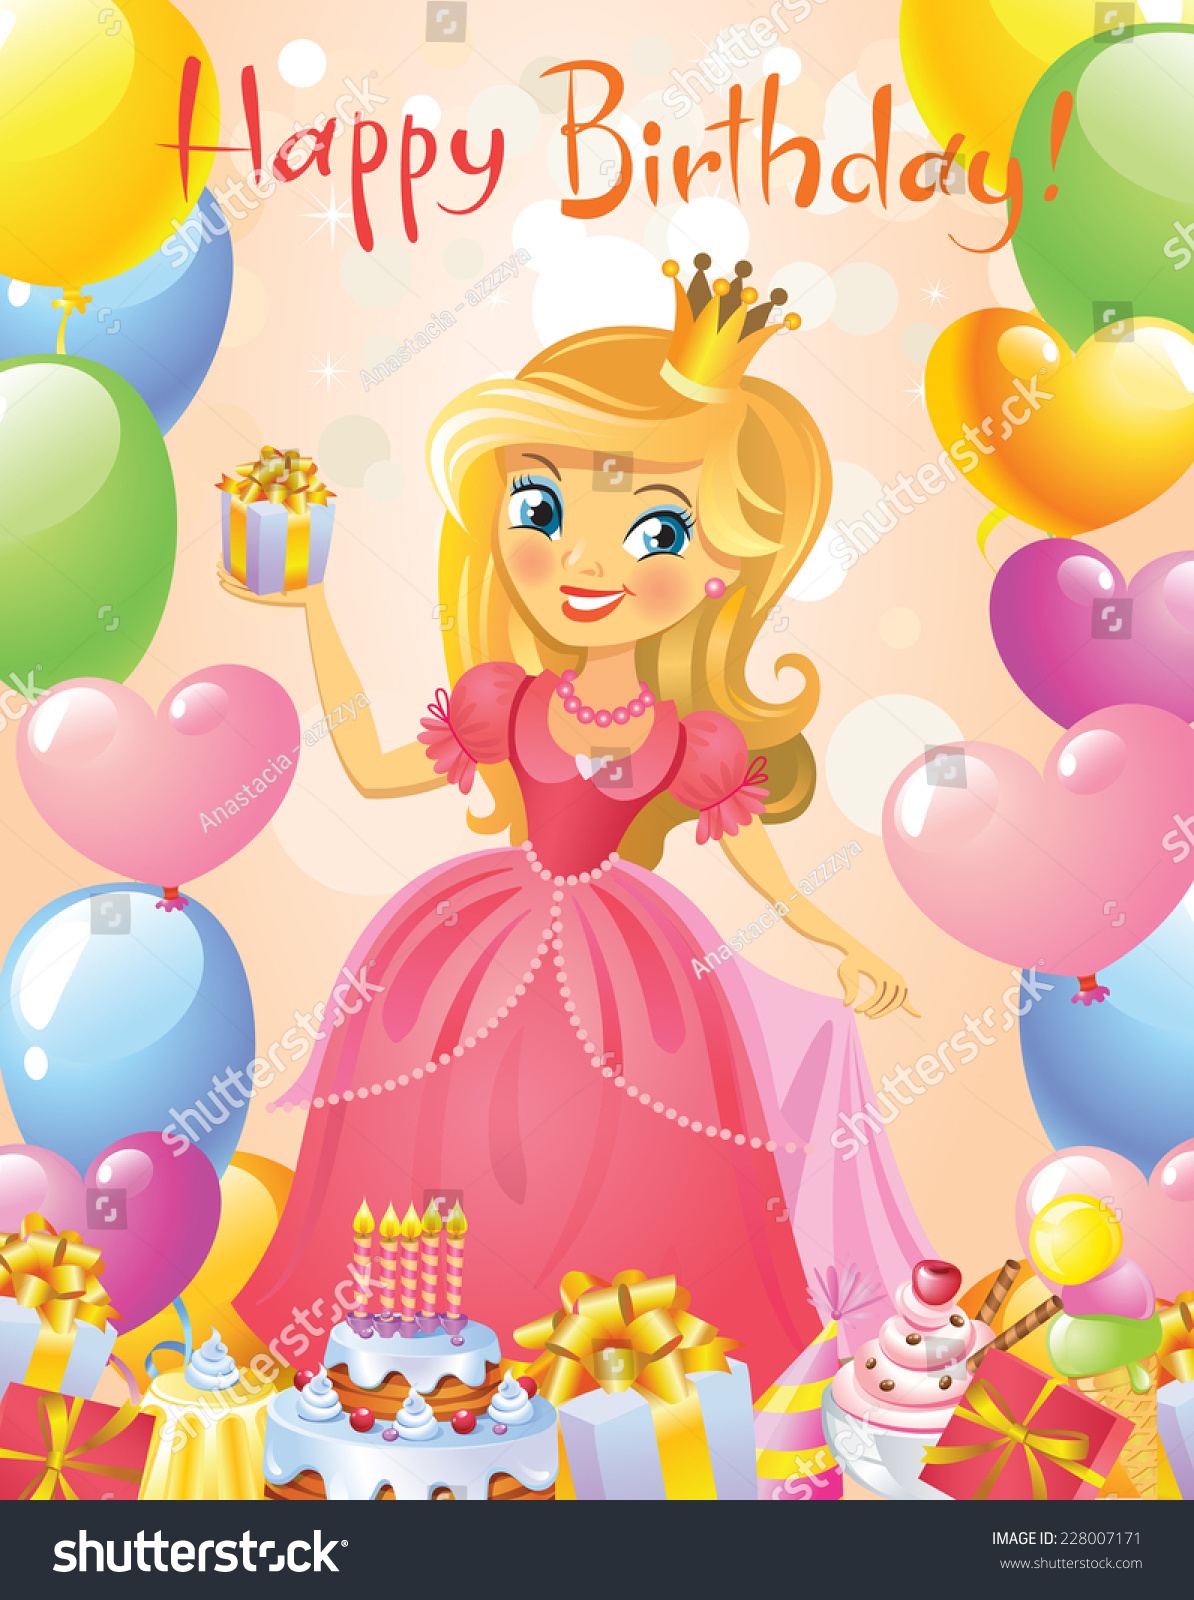 Happy Birthday Princess Greeting Card Illustration Stock Vector ...